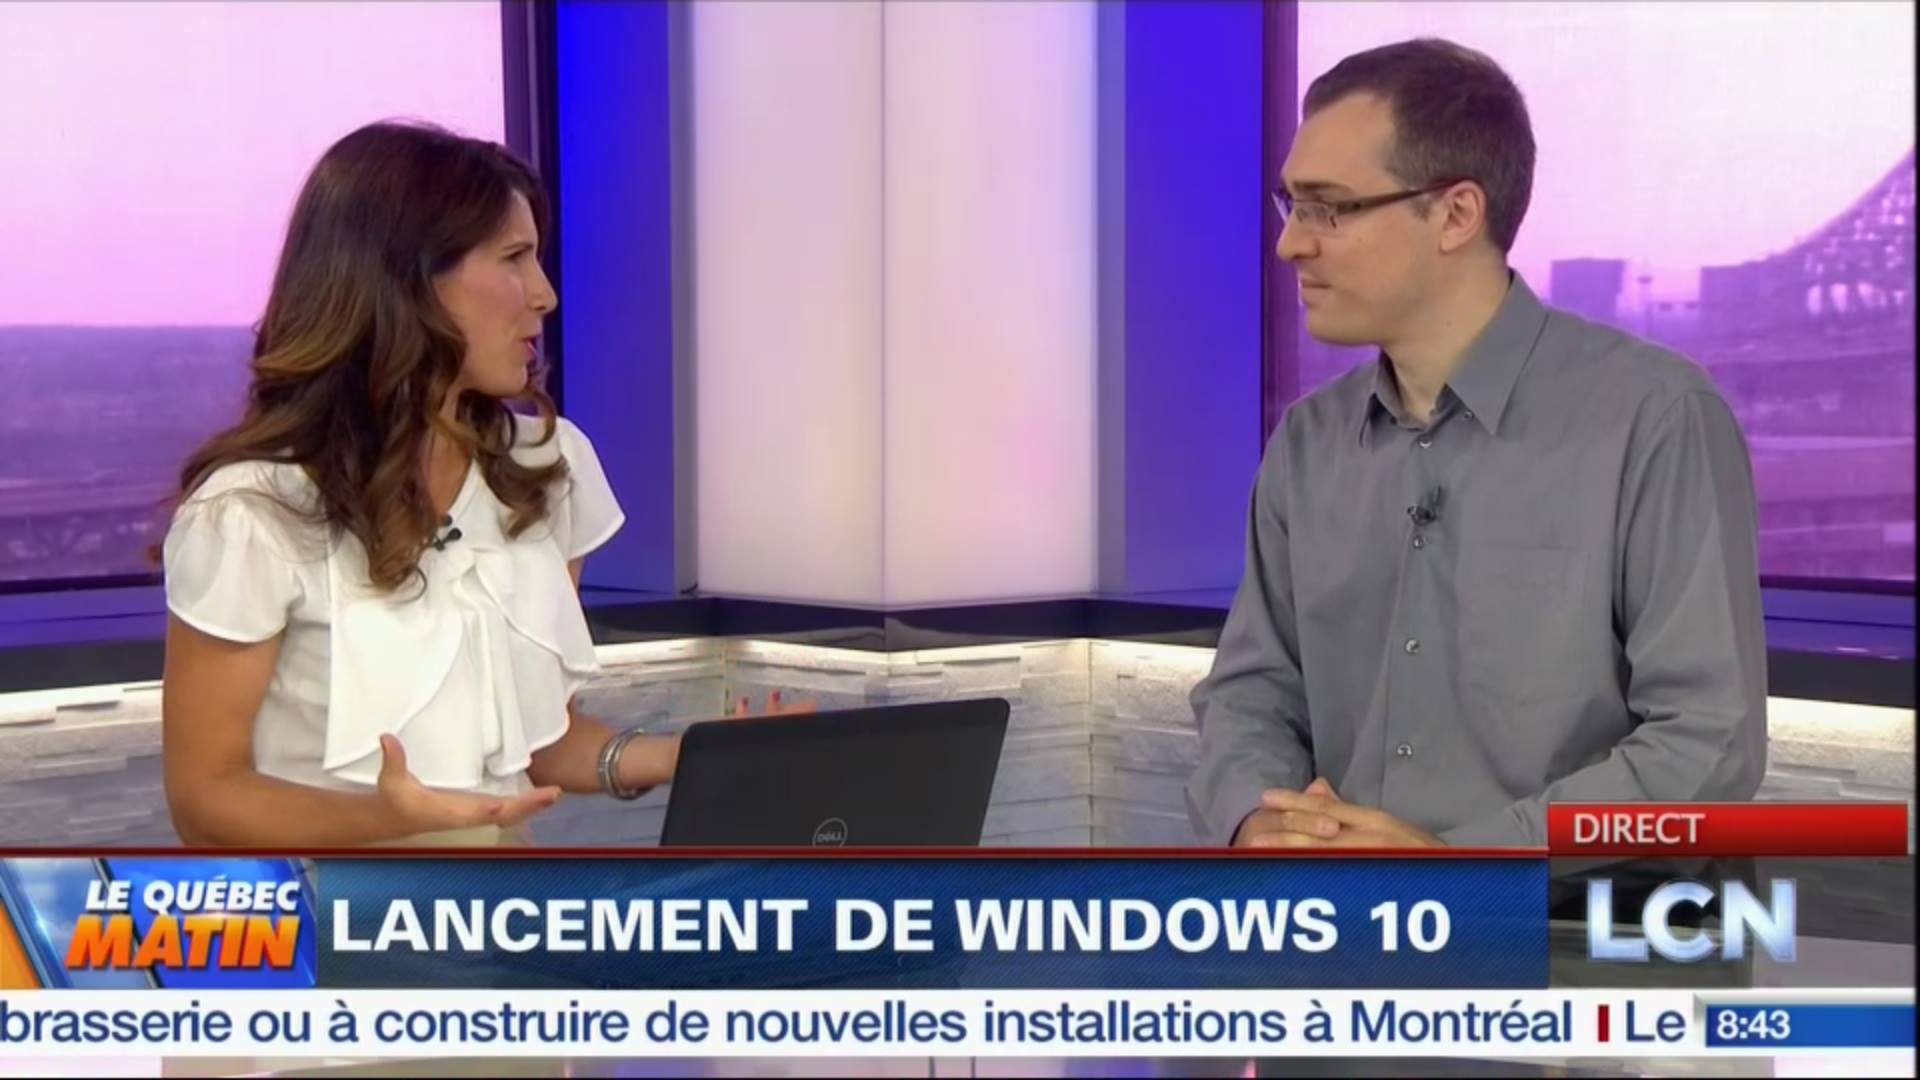 Lancement de Windows 10 Entrevue Benoit Chamontin LCN Geeks and Com